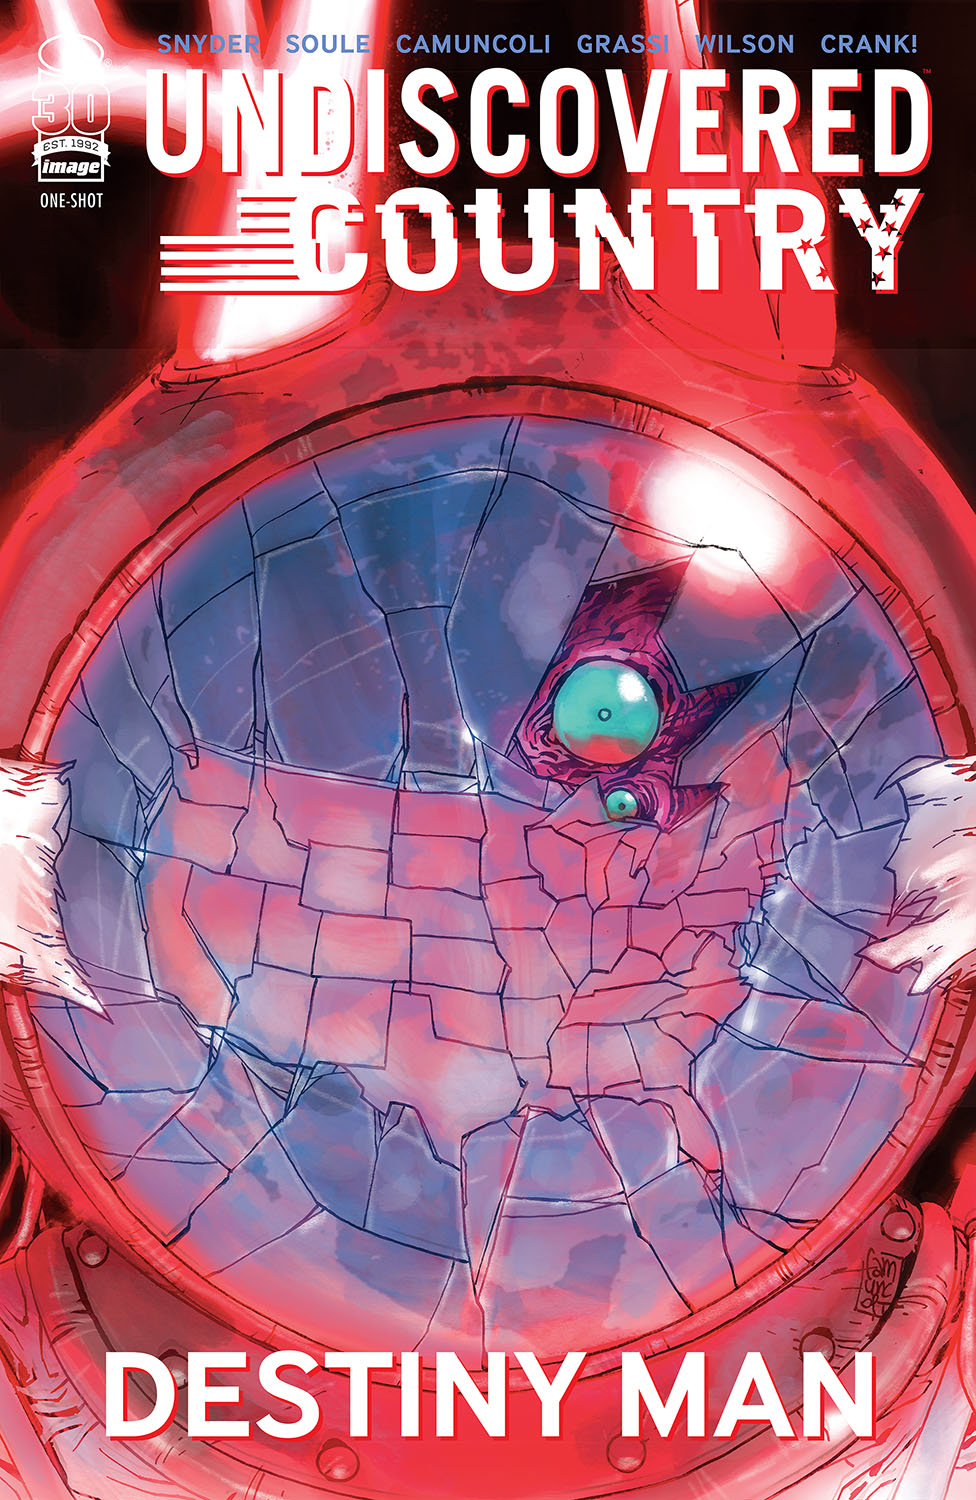 Undiscovered Country Destiny Man Special Cover A Camuncoli (Mature)